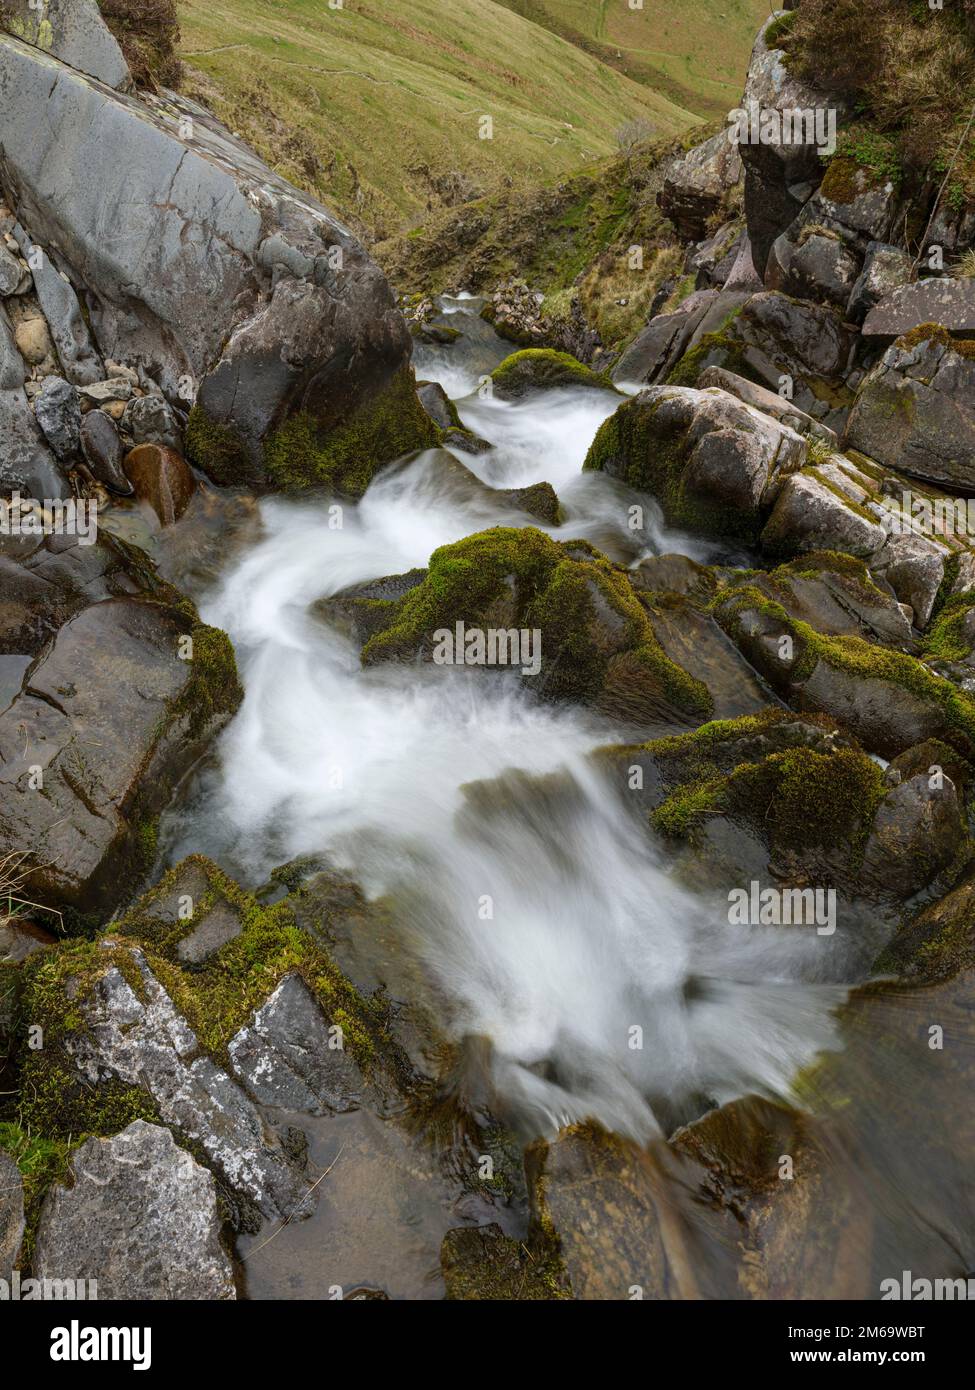 Cautley Tiller, la plus haute chute d'eau surterrain d'Angleterre, The Howgill Fells, Cumbria, Angleterre Banque D'Images